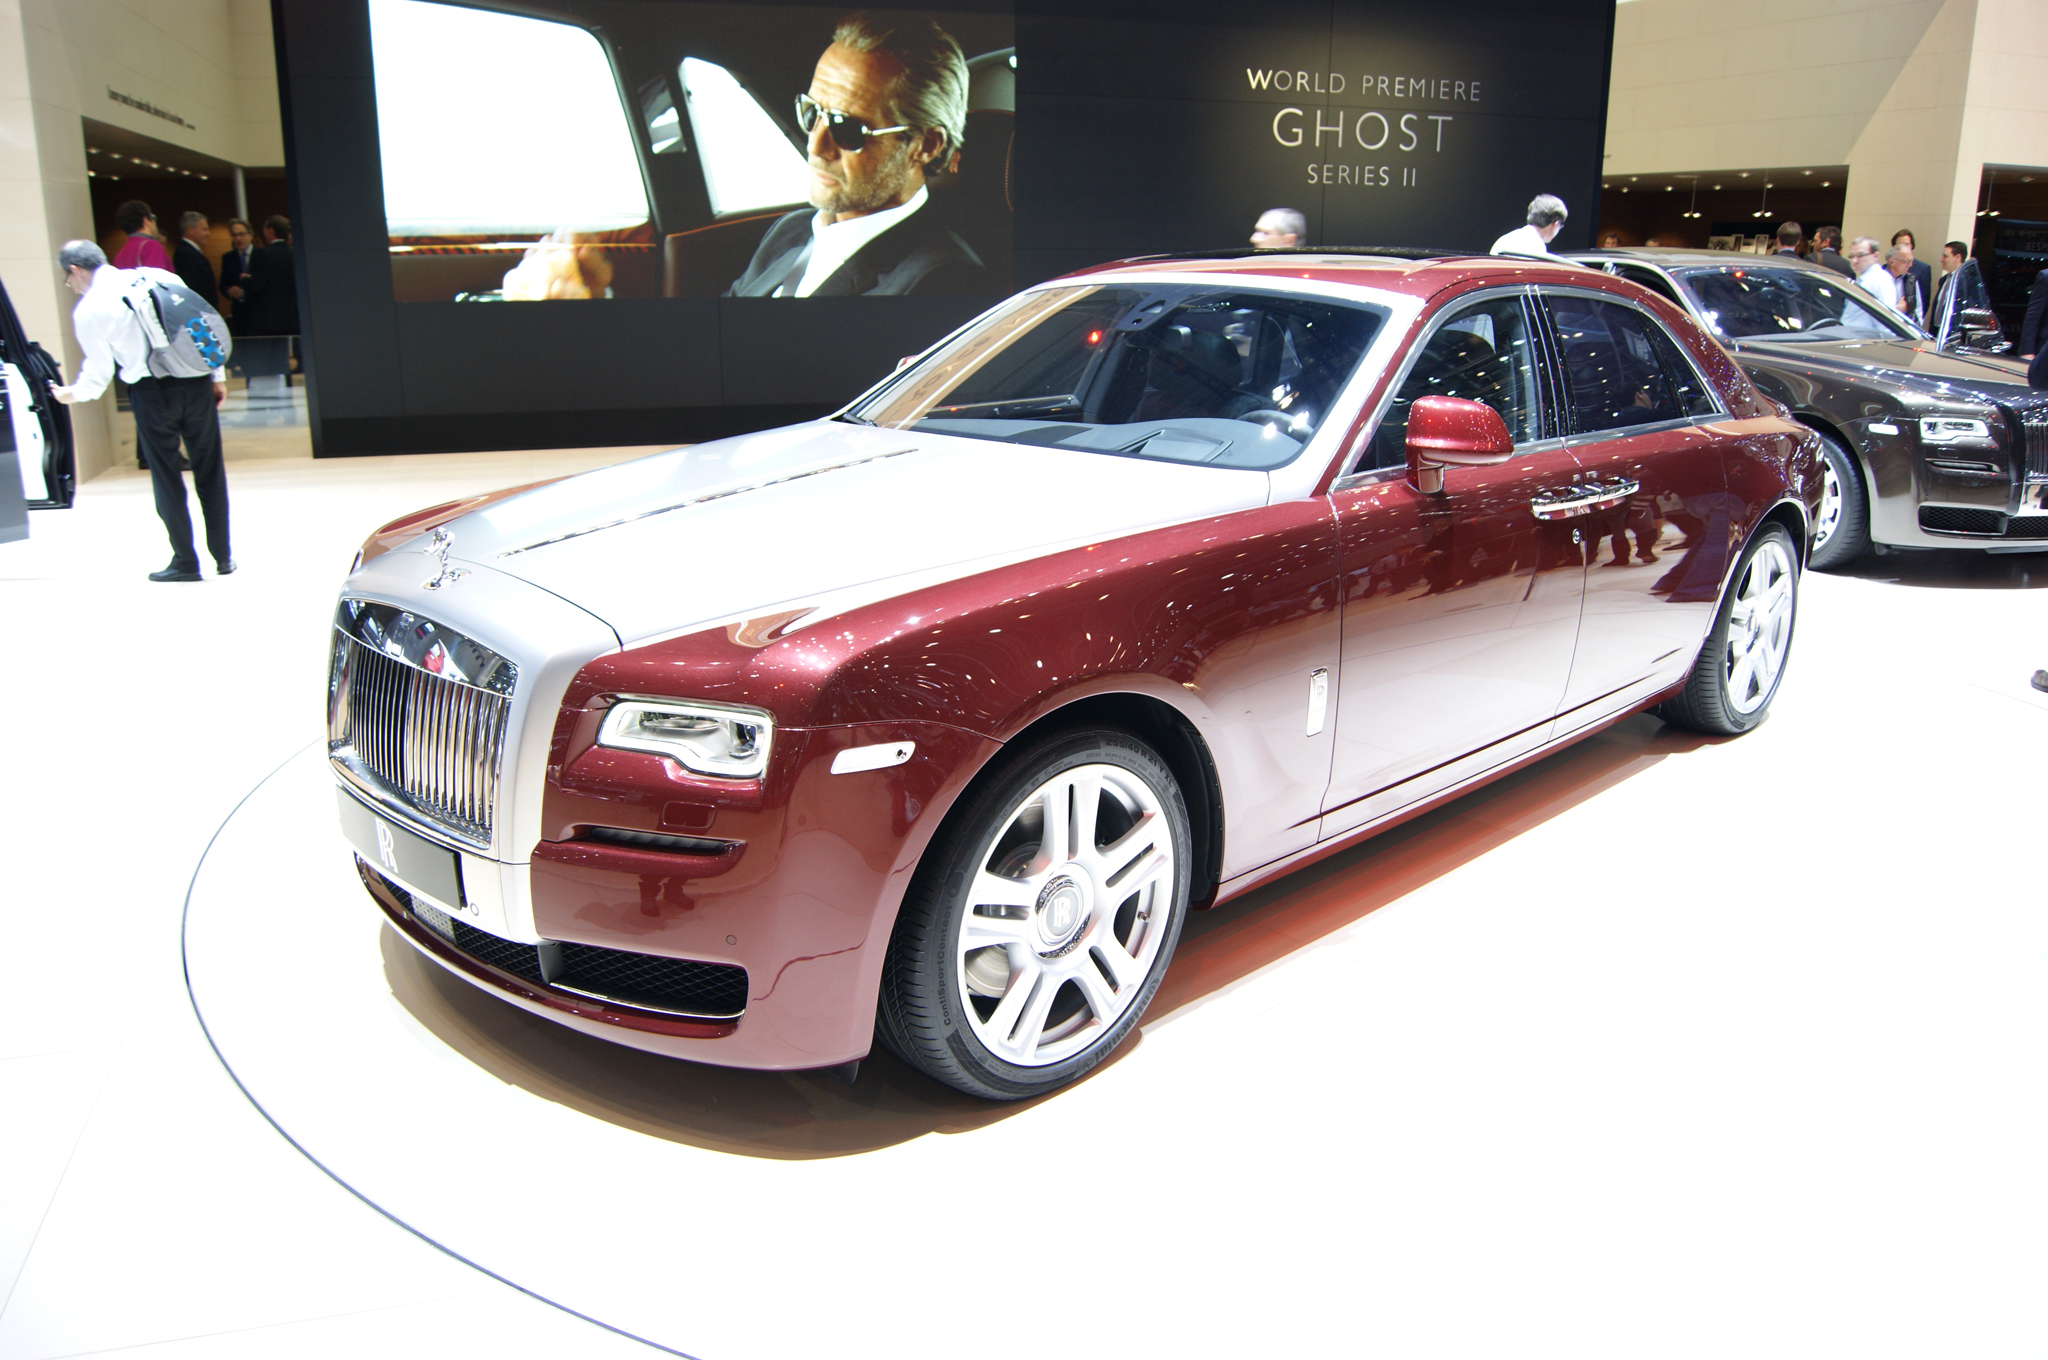  Rolls Royce Ghost Widescreen Background Wallpapers